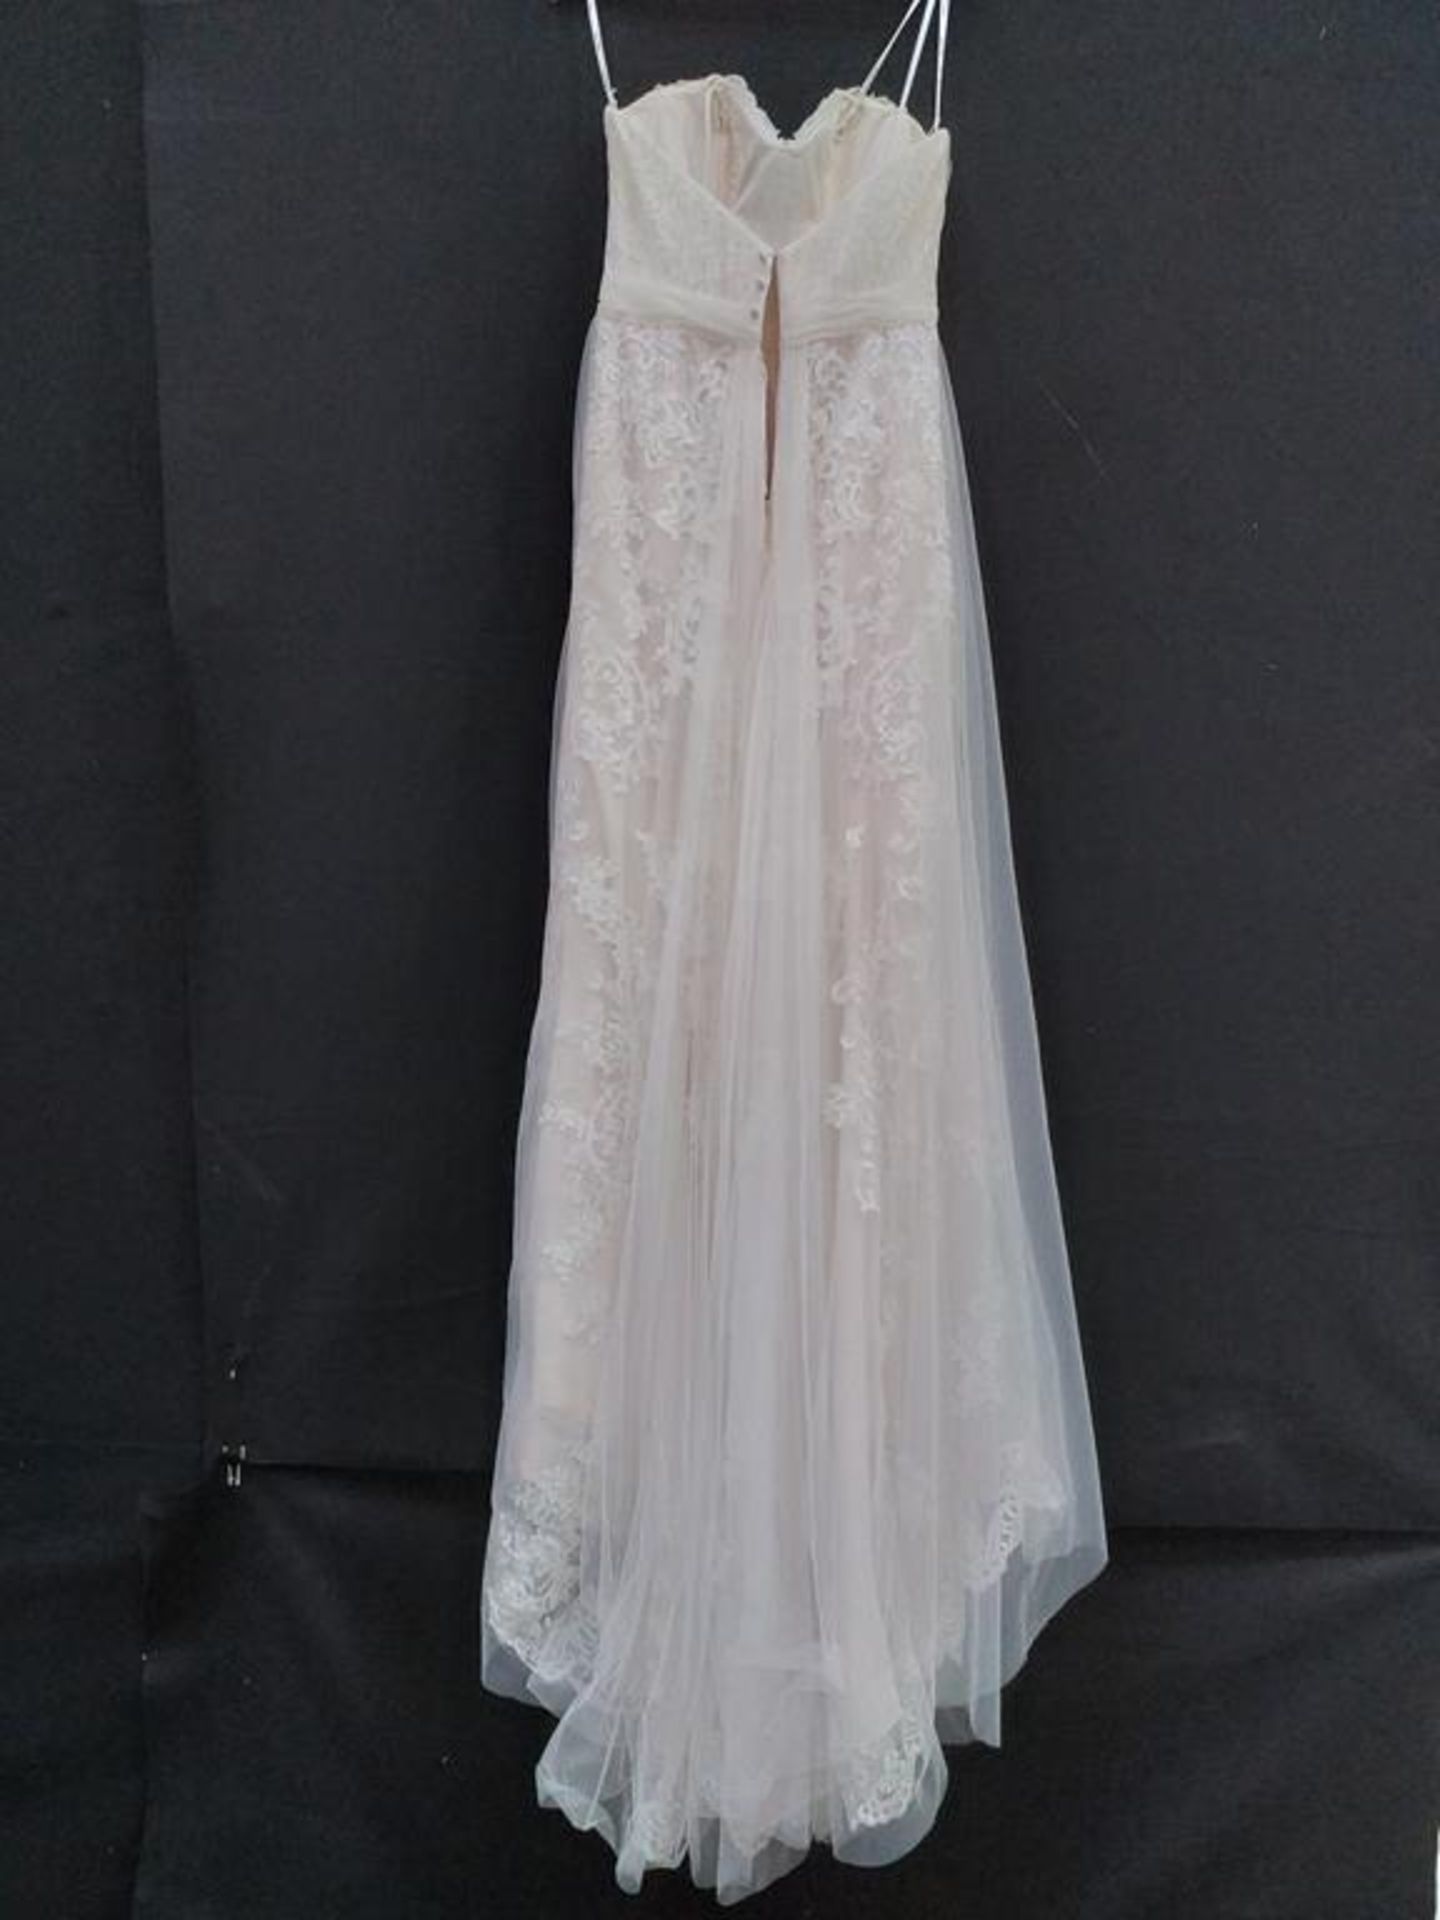 Stella York model 6341 wedding dress - Image 2 of 4